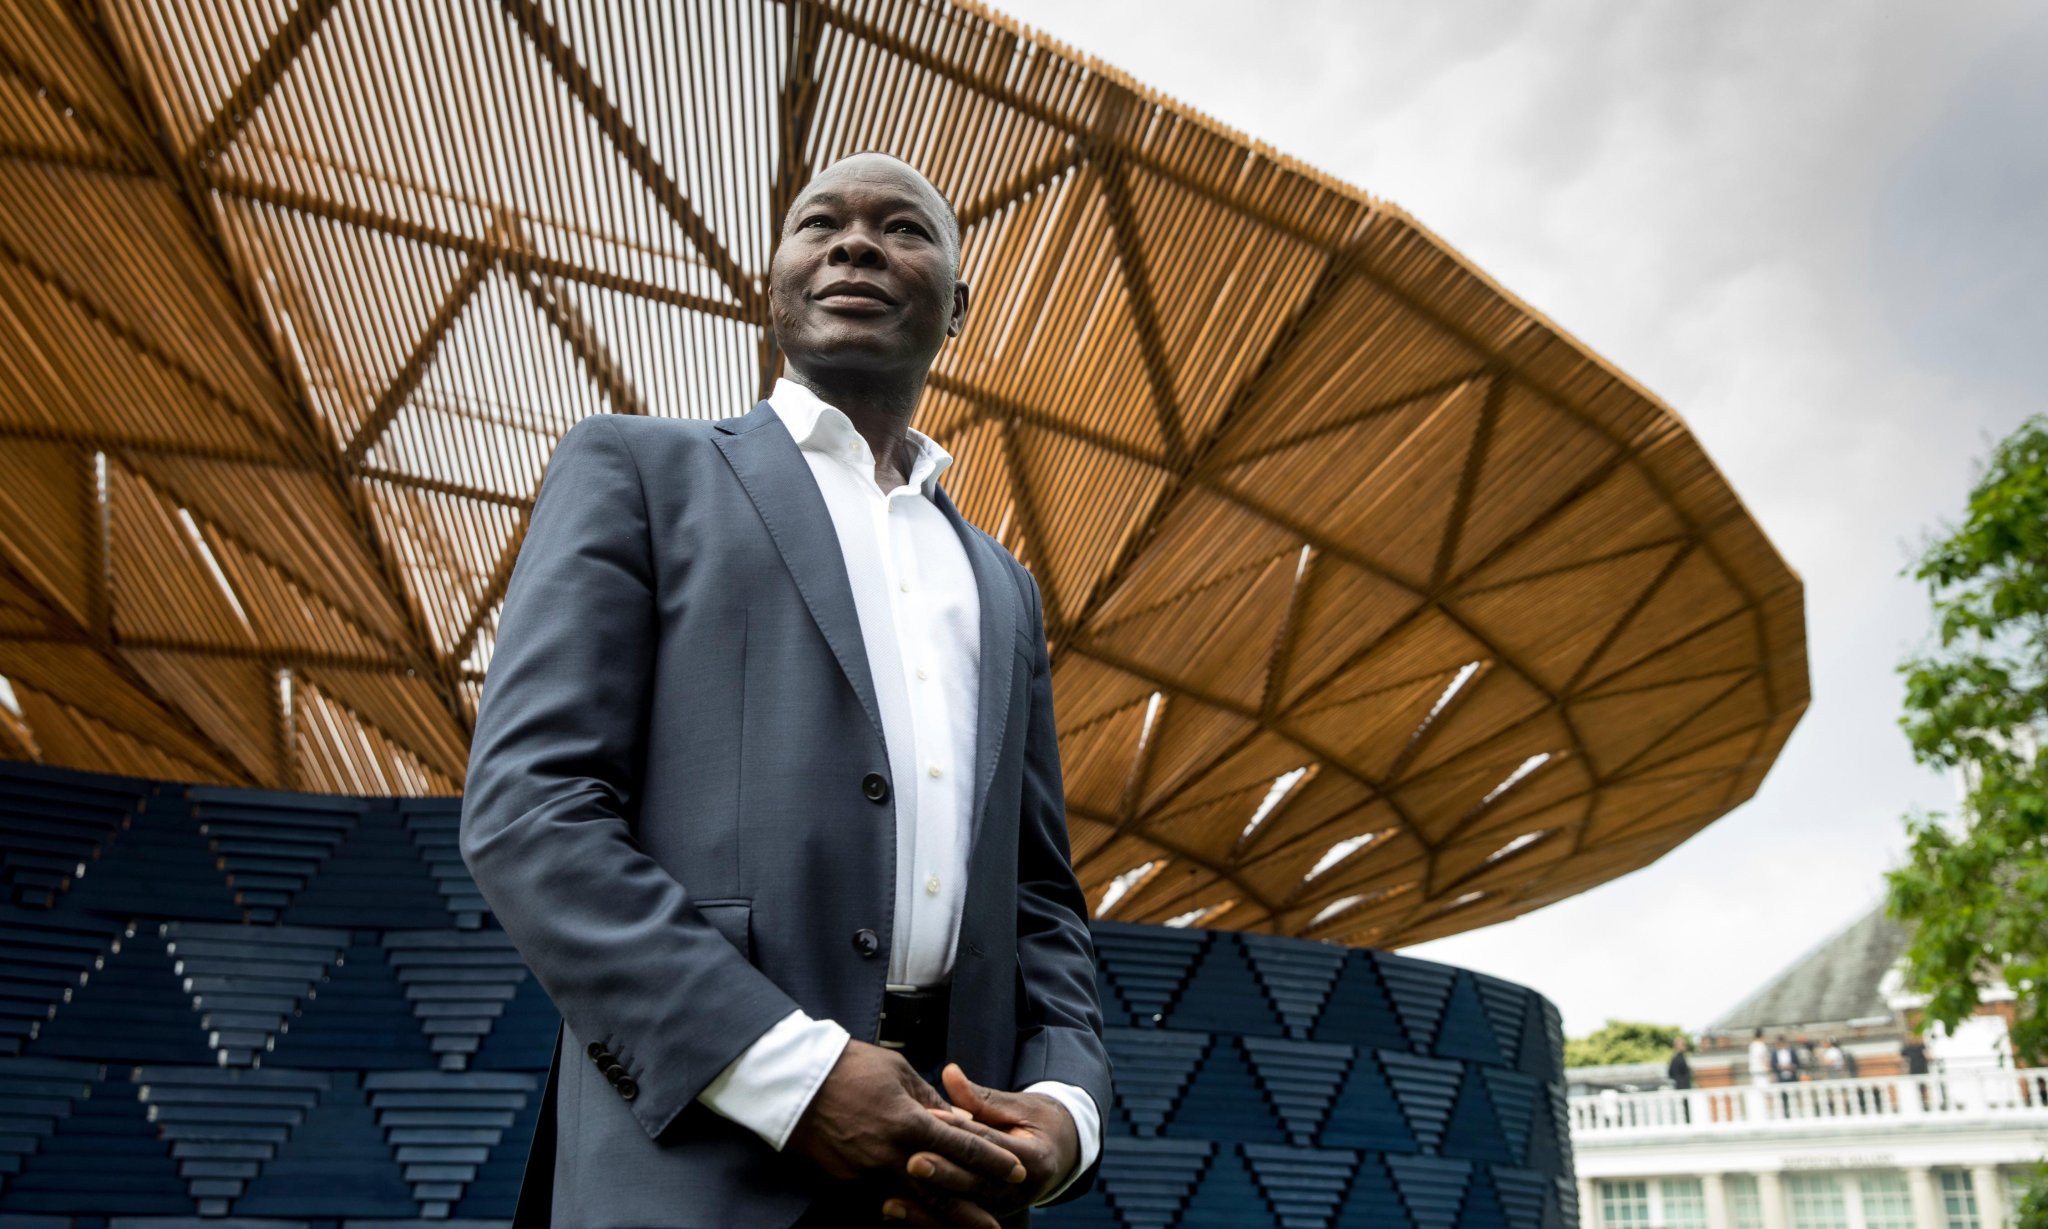 ‘It is unbelievable’: Francis Kéré becomes first black architect to win the Pritzker prize